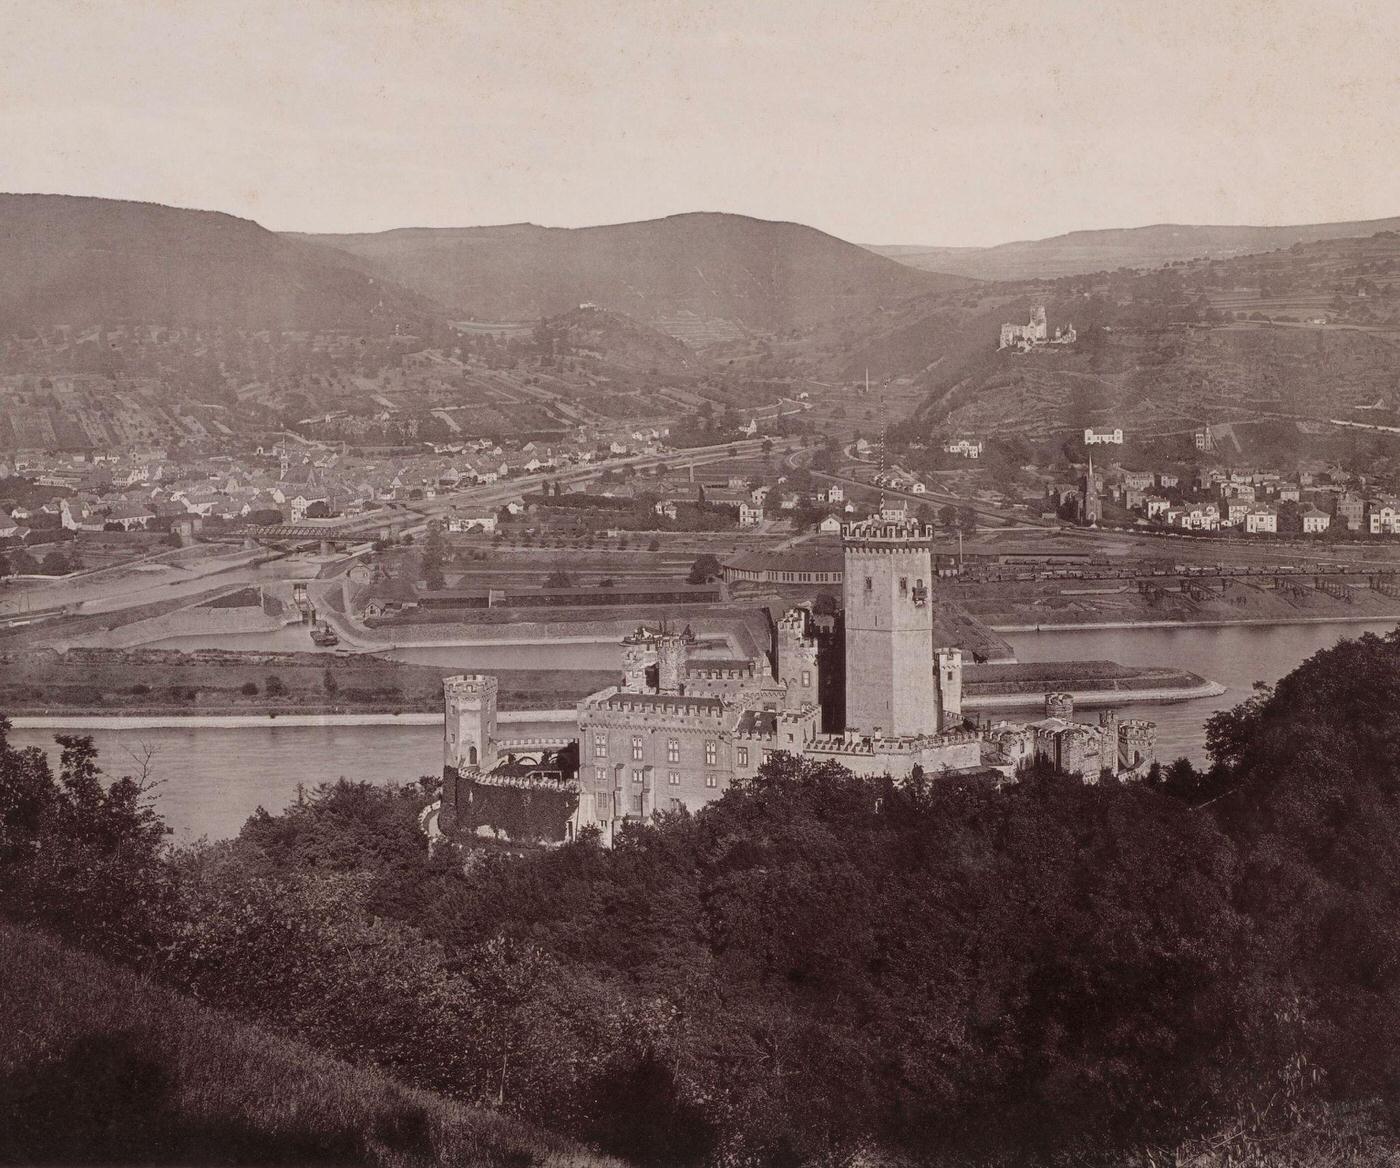 Castle Stolzenfels and Niederlahnstein, near Koblenz, Germany, 1890.